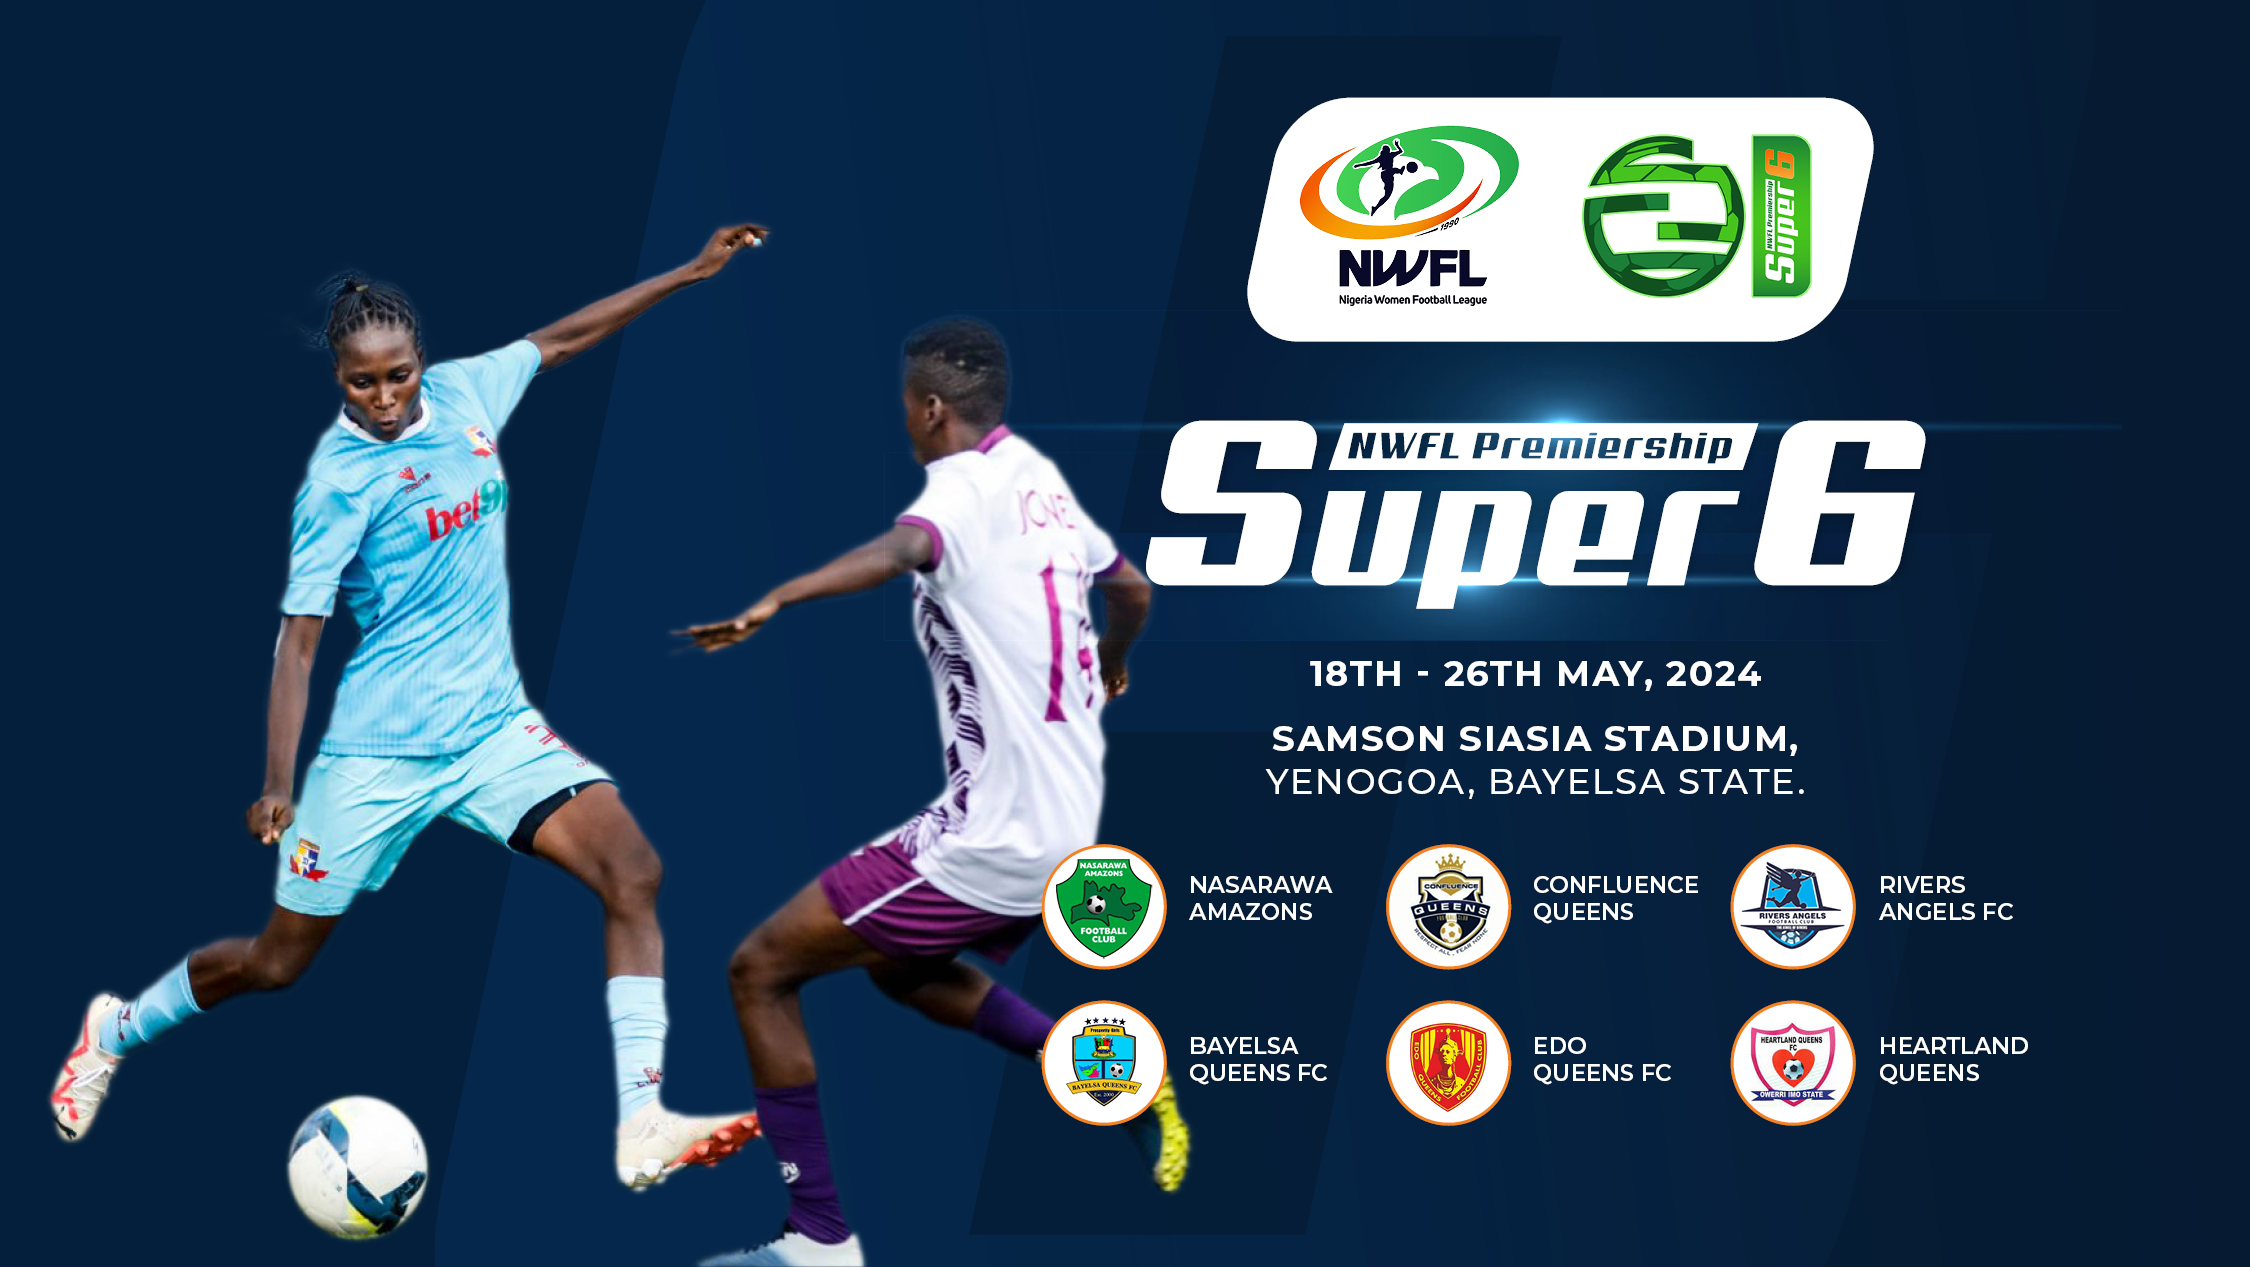 NWFL: Super 6 to hold in Bayelsa